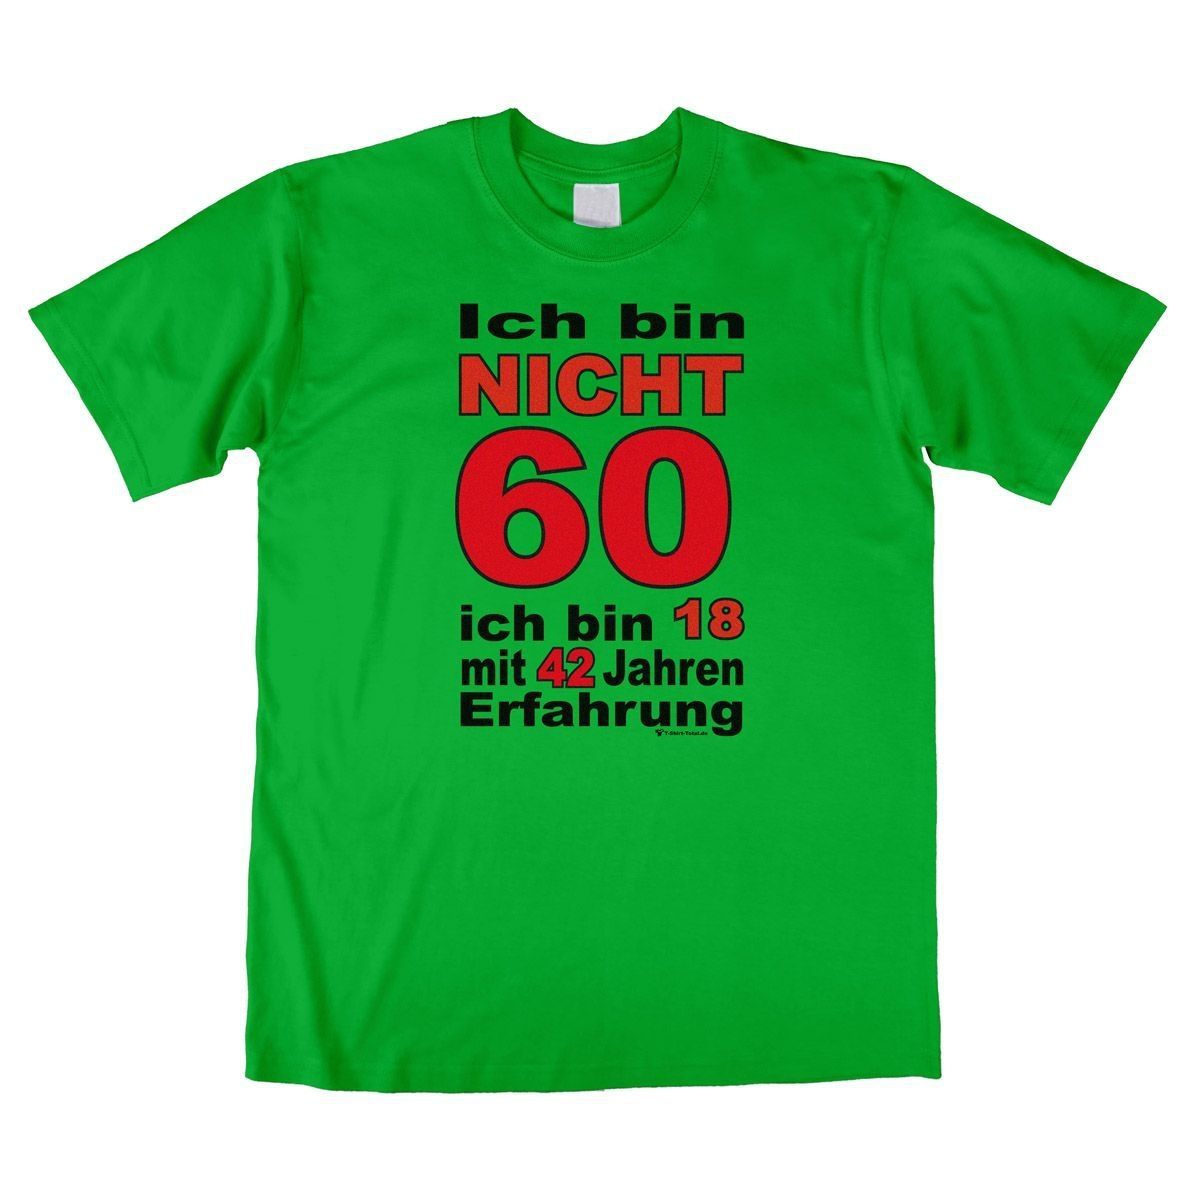 Bin nicht 60 Unisex T-Shirt grün Large